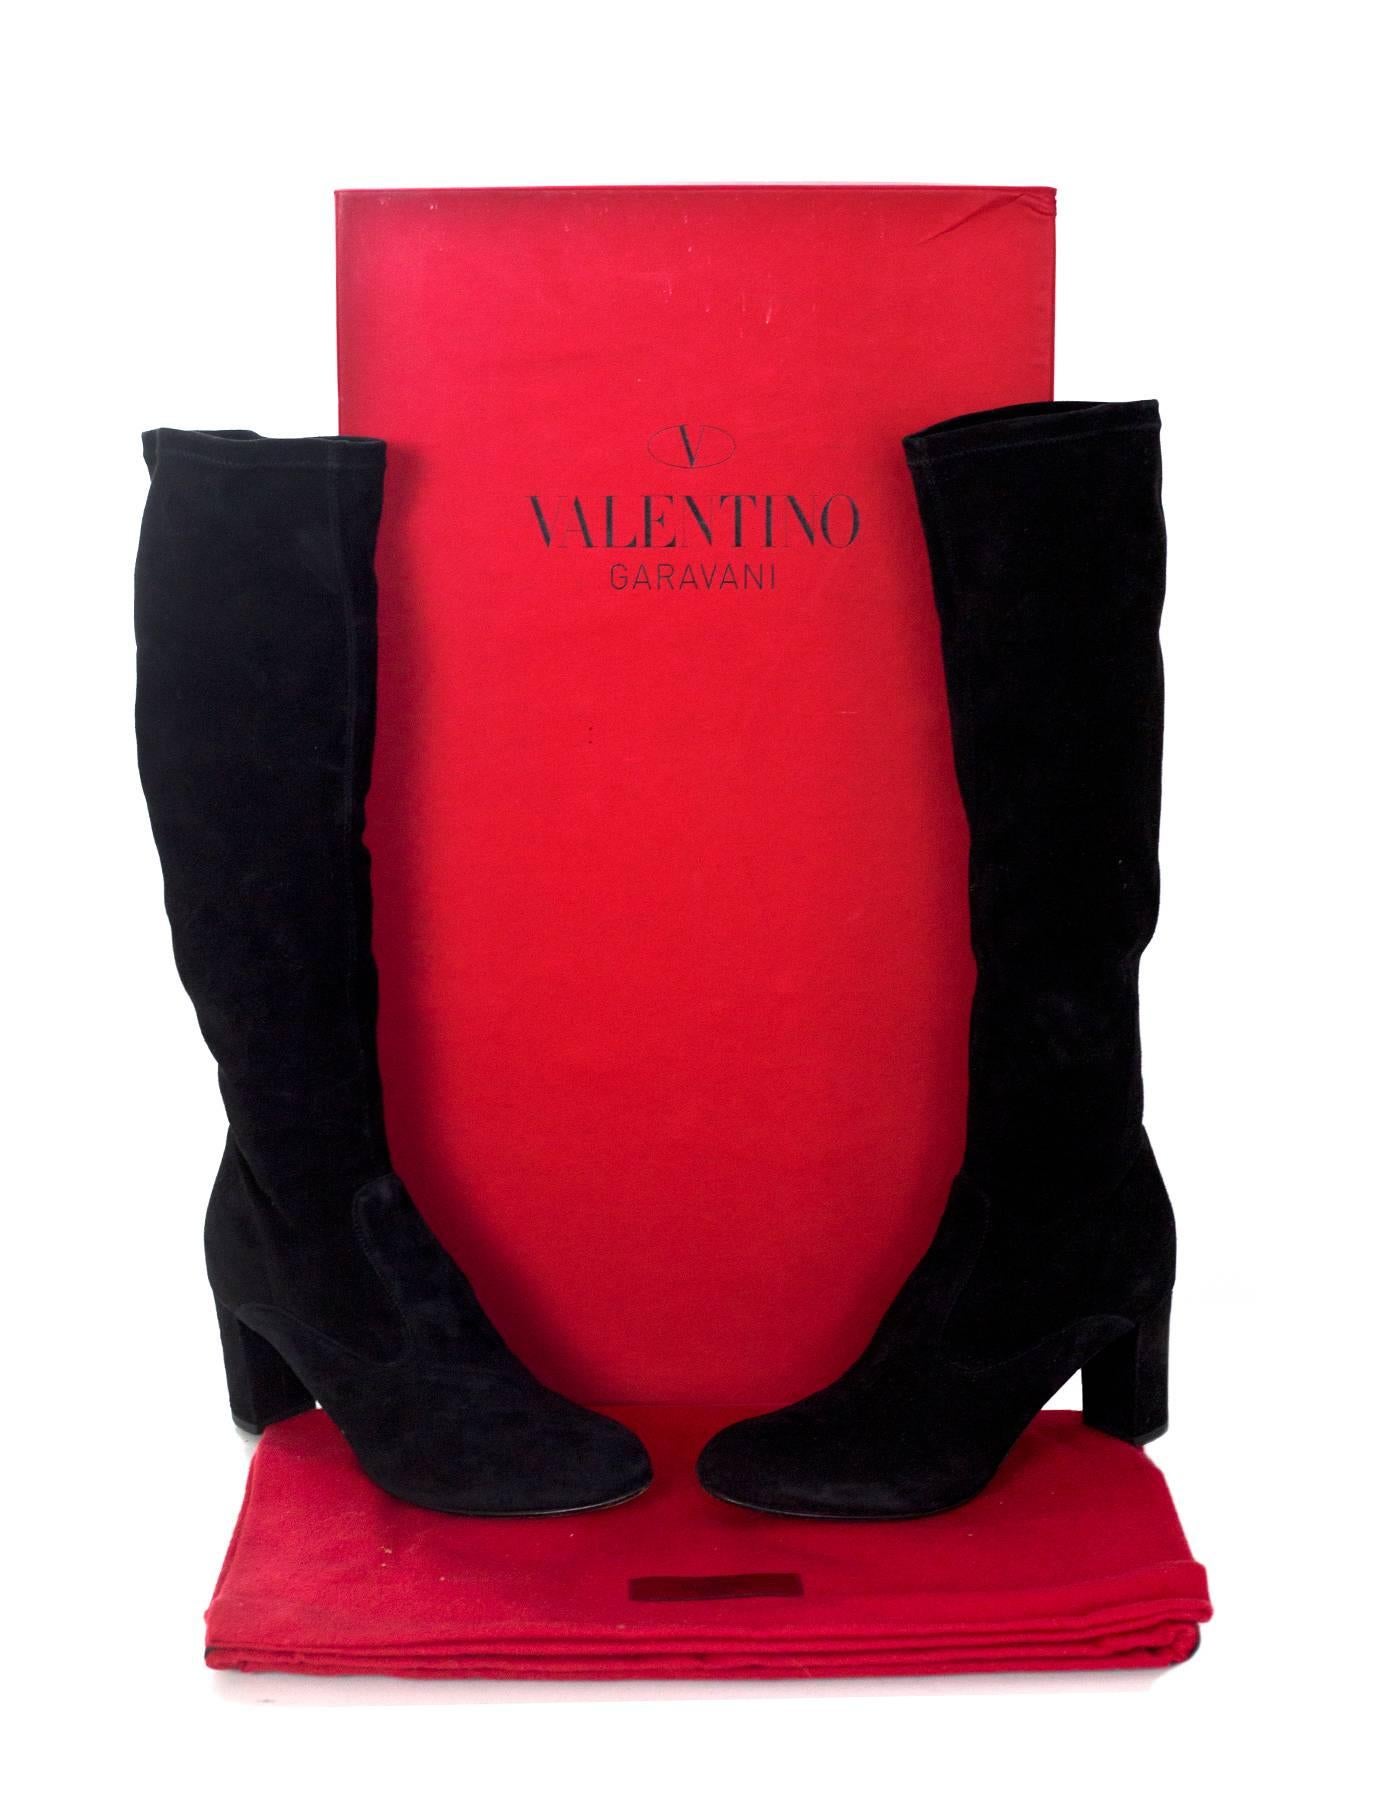 Valentino Black Suede Heeled Boots Sz 36.5 2